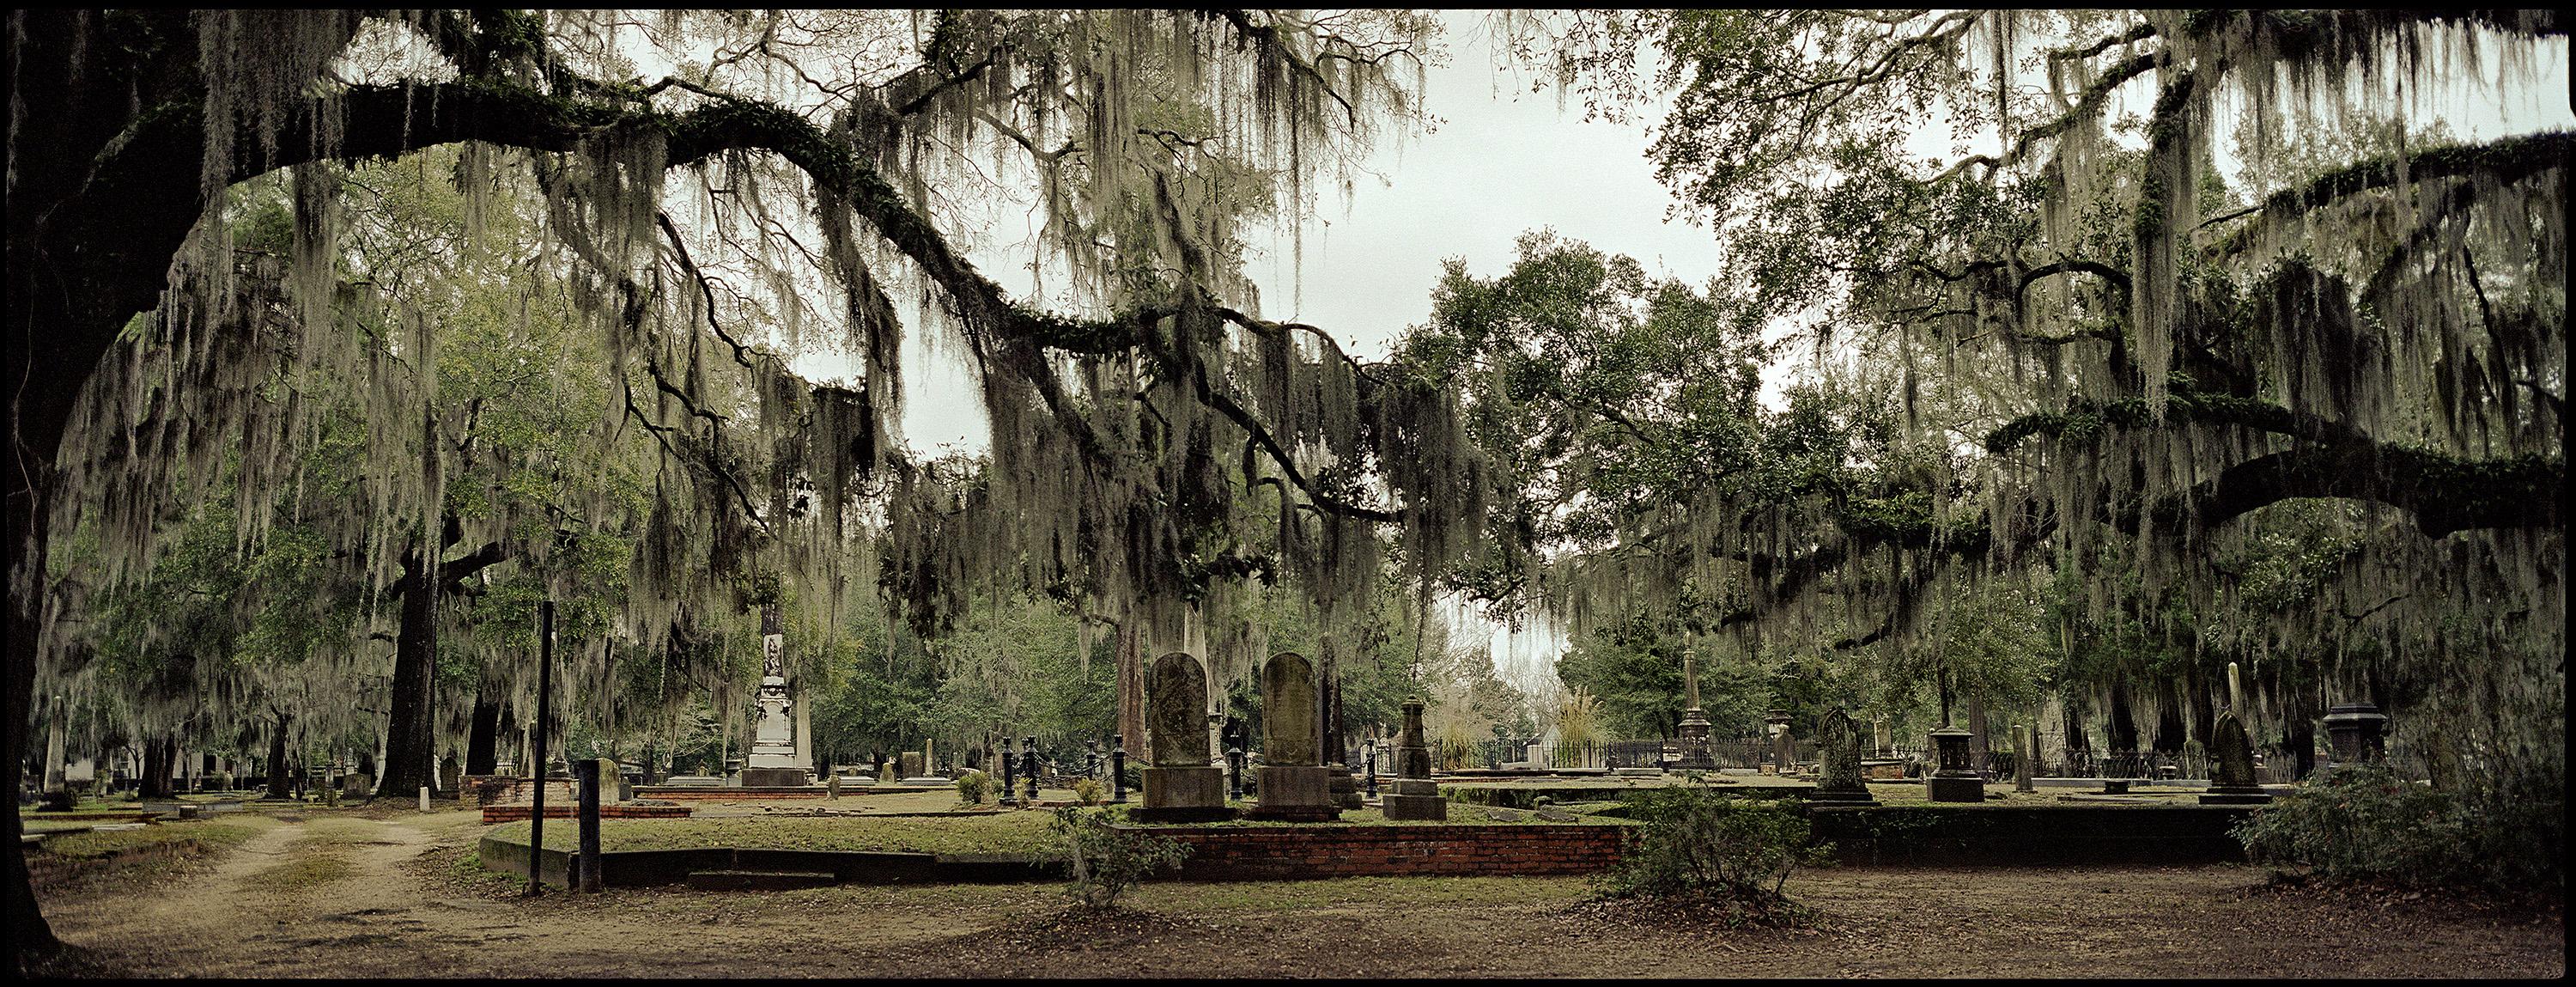 Jerry Siegel Landscape Photograph - "Old Live Oak Cemetery, Selma" - Southern Photography - Christenberry